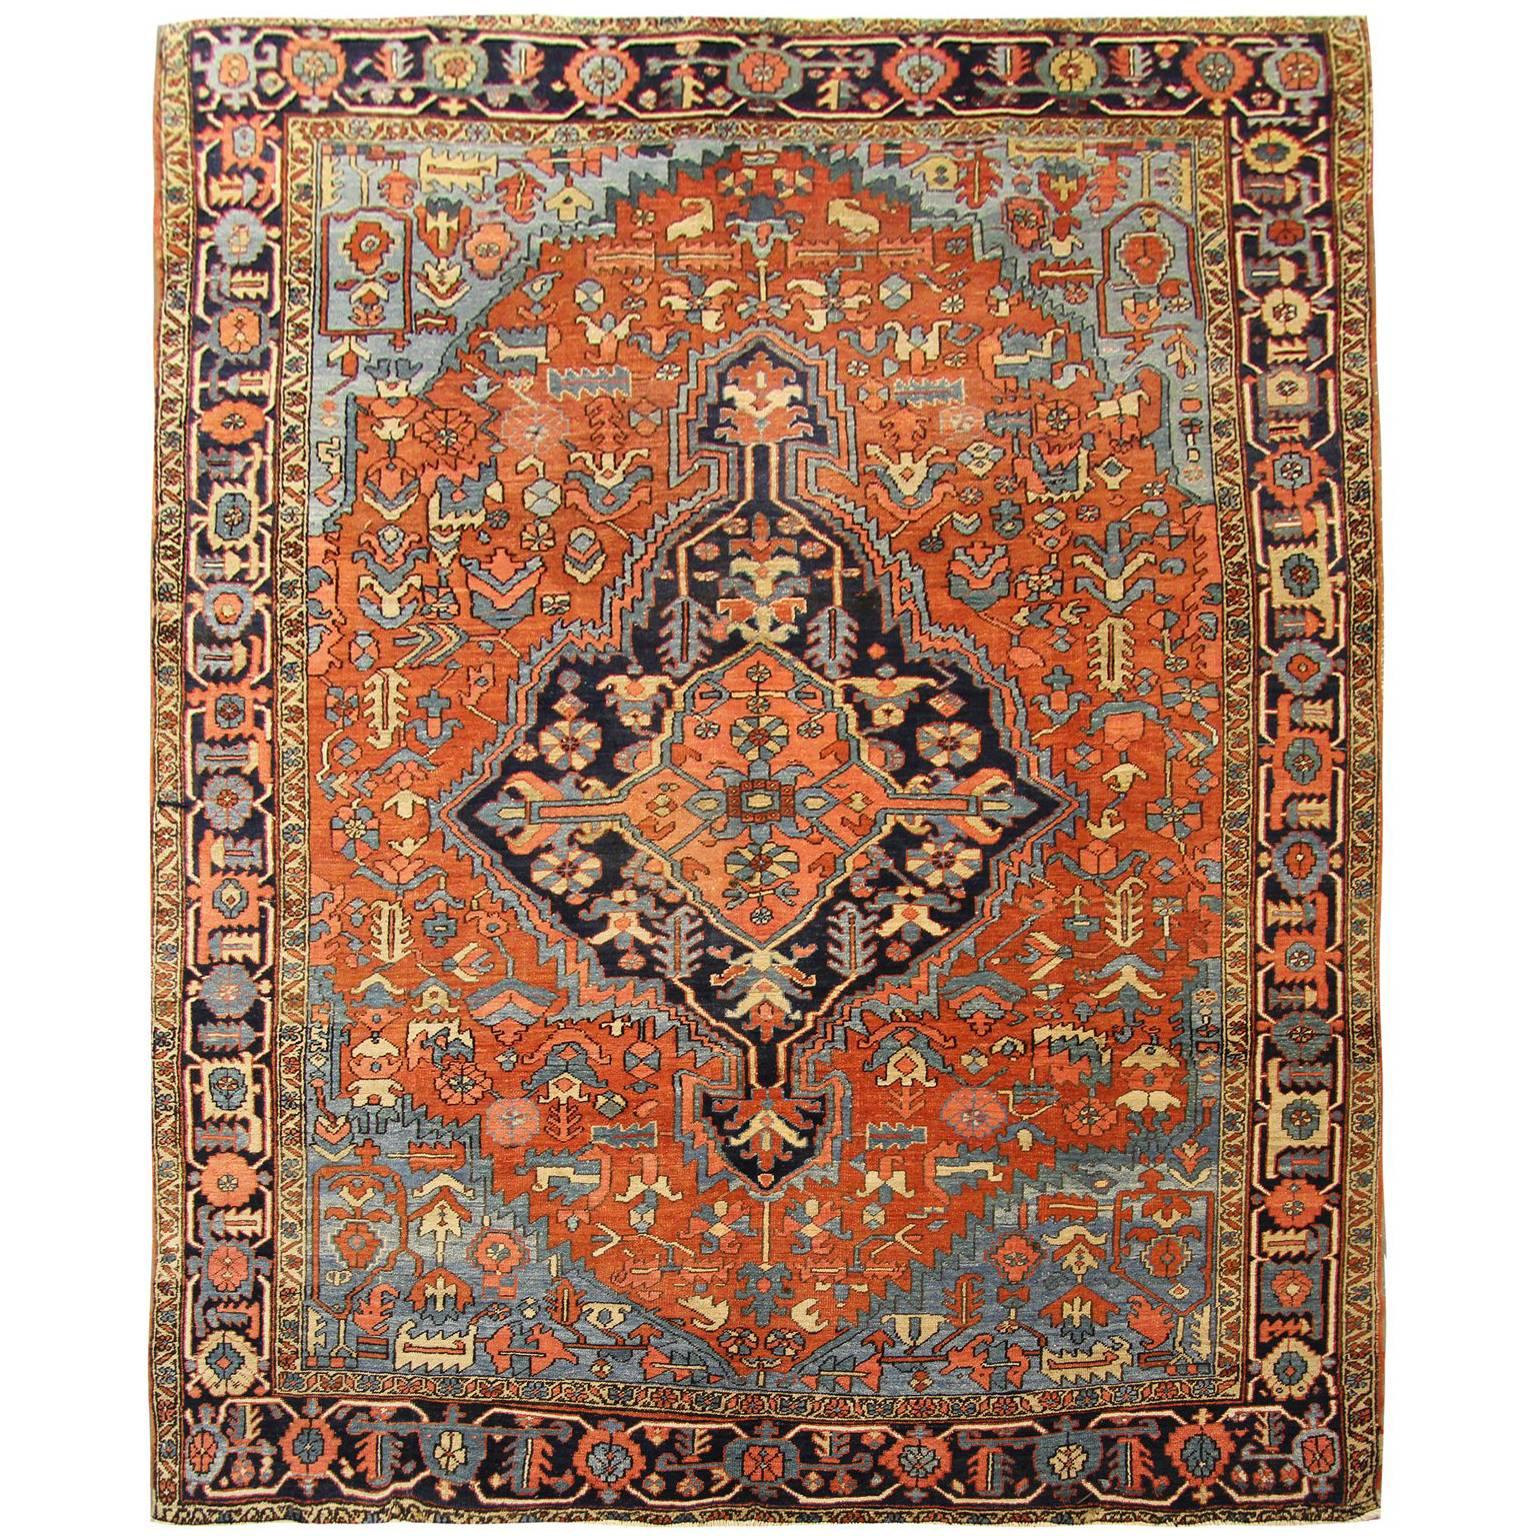 Antique Persian Rugs, Carpet Rug from Heriz